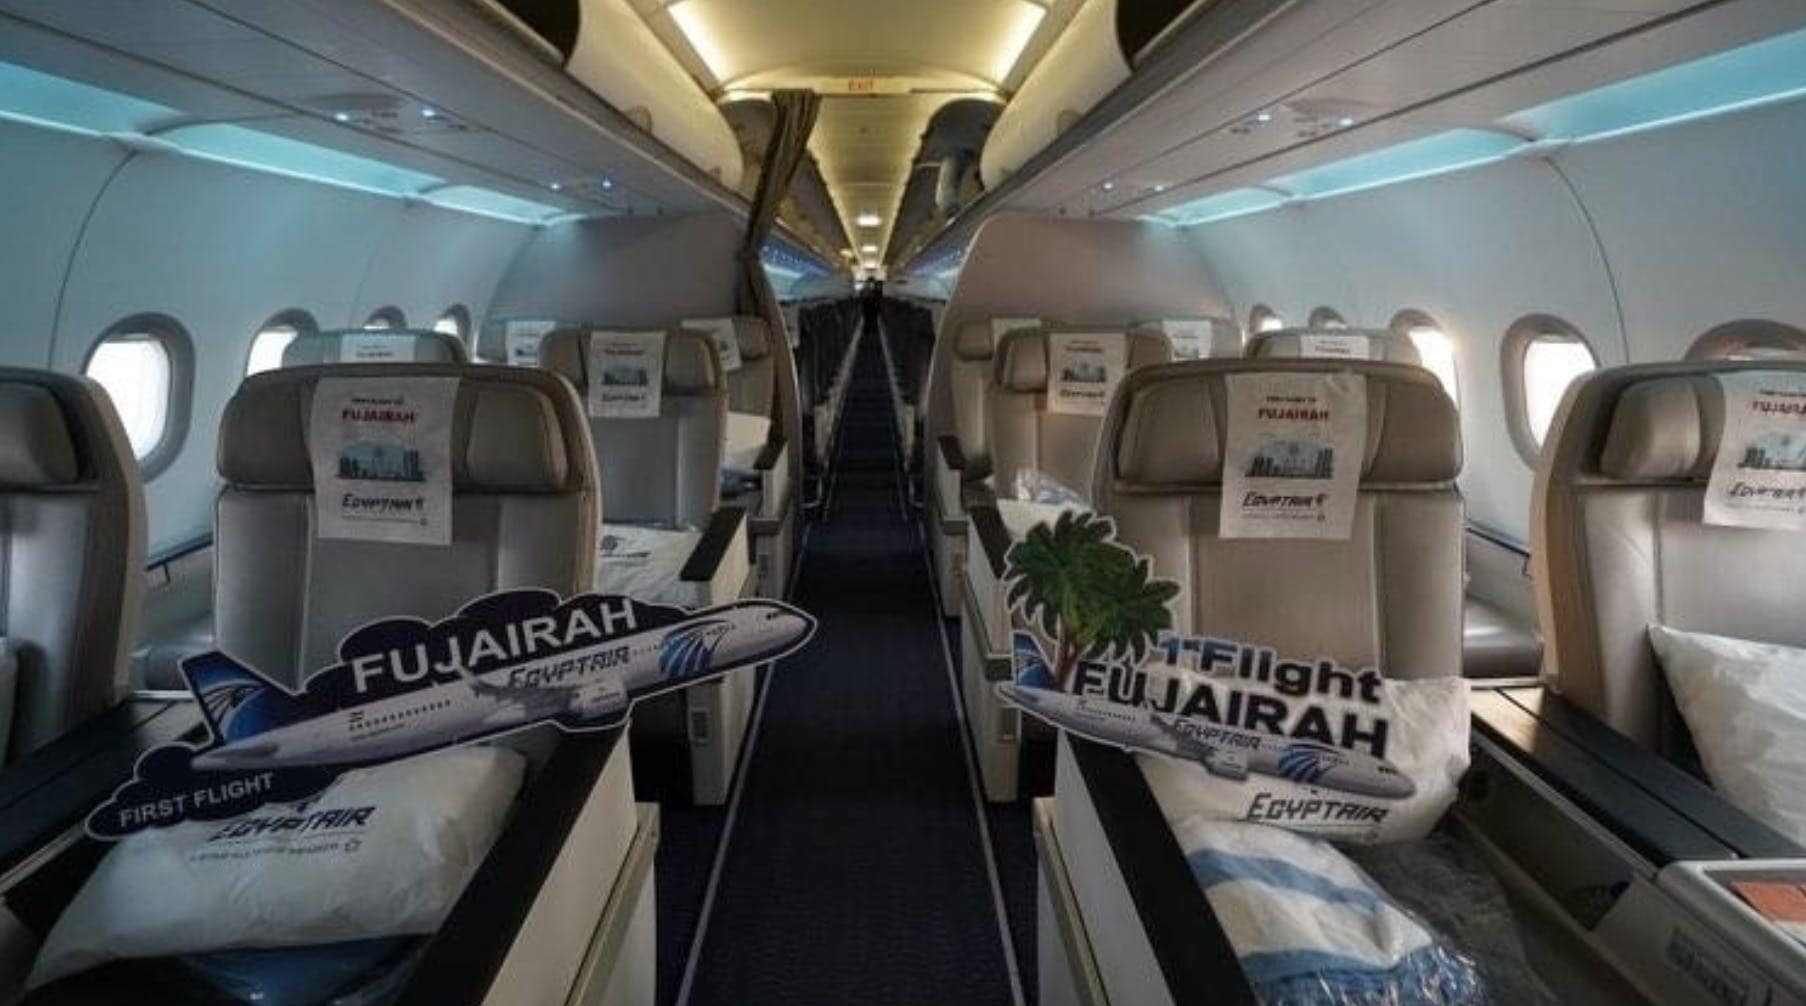 EgyptAir resumes Fujairah flights